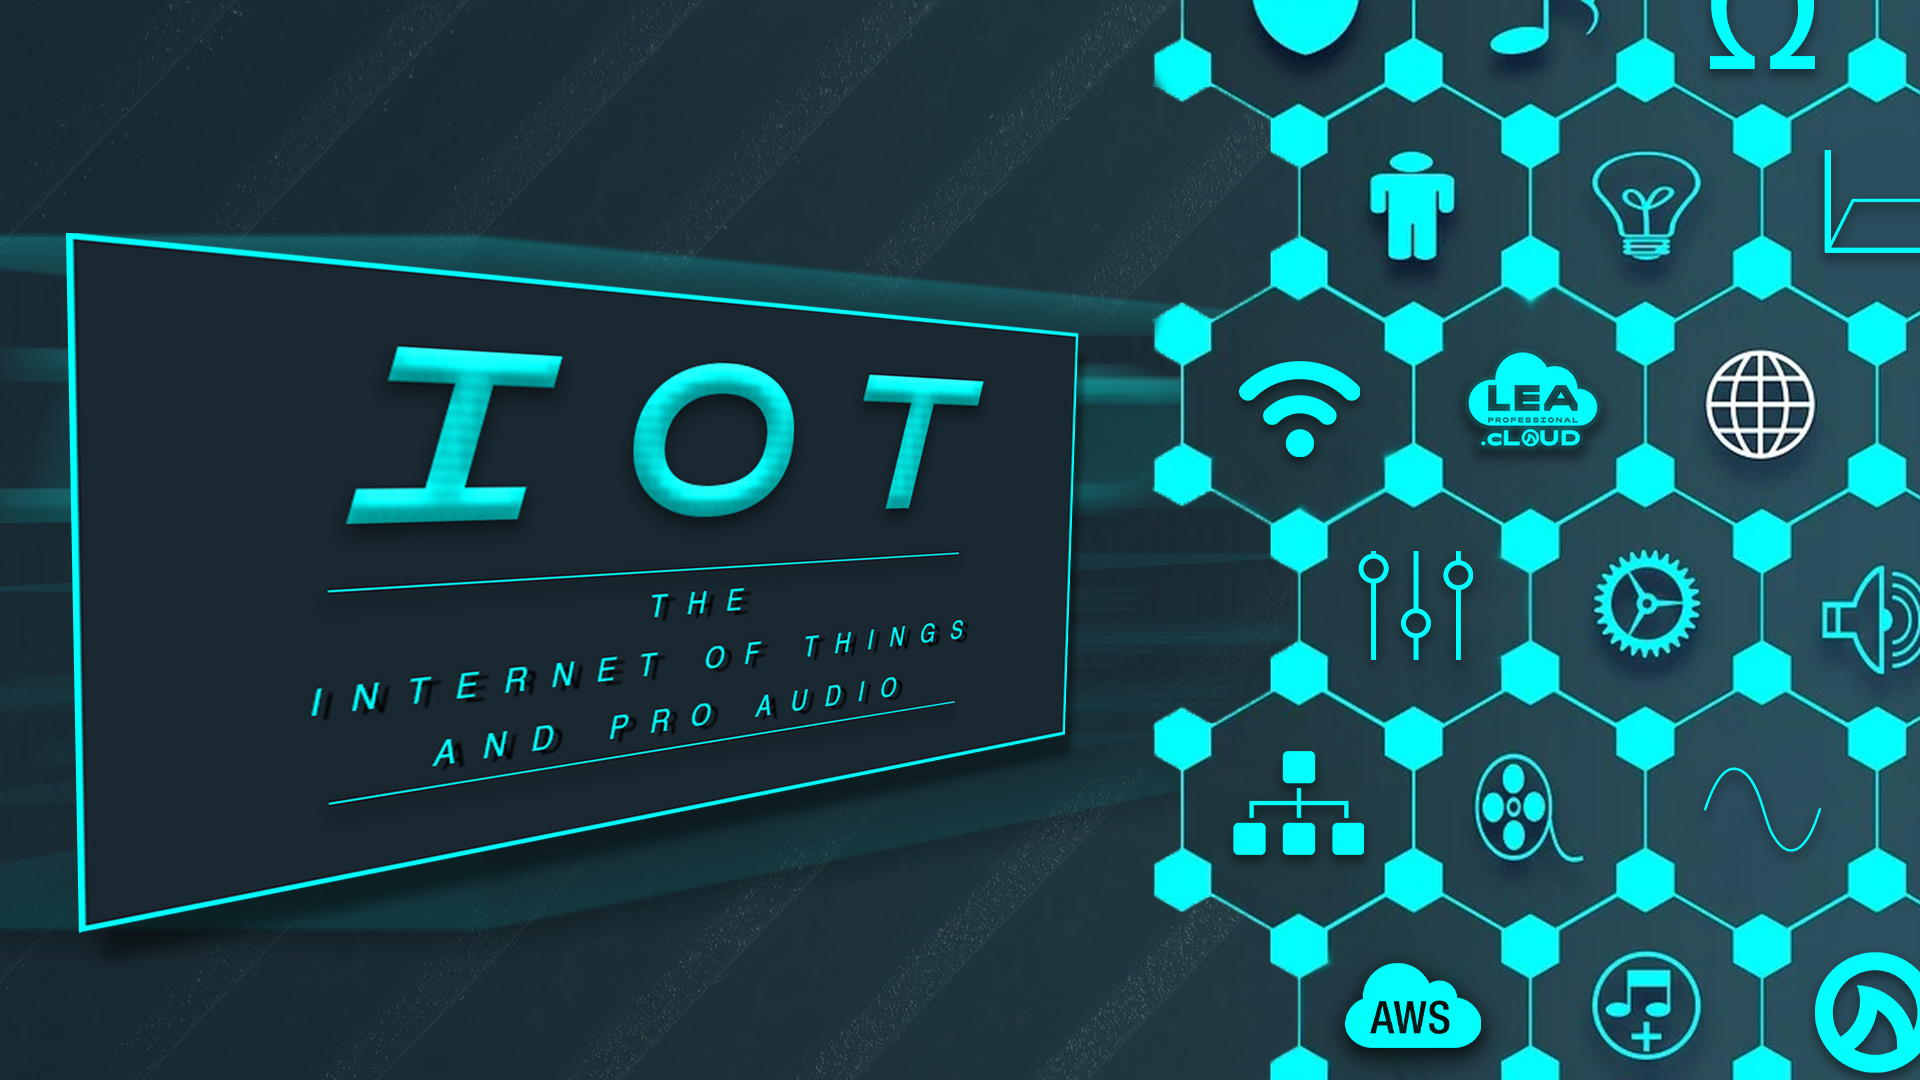 IoT_Internet_of_Things_Pro_Audio_LEA_Professional